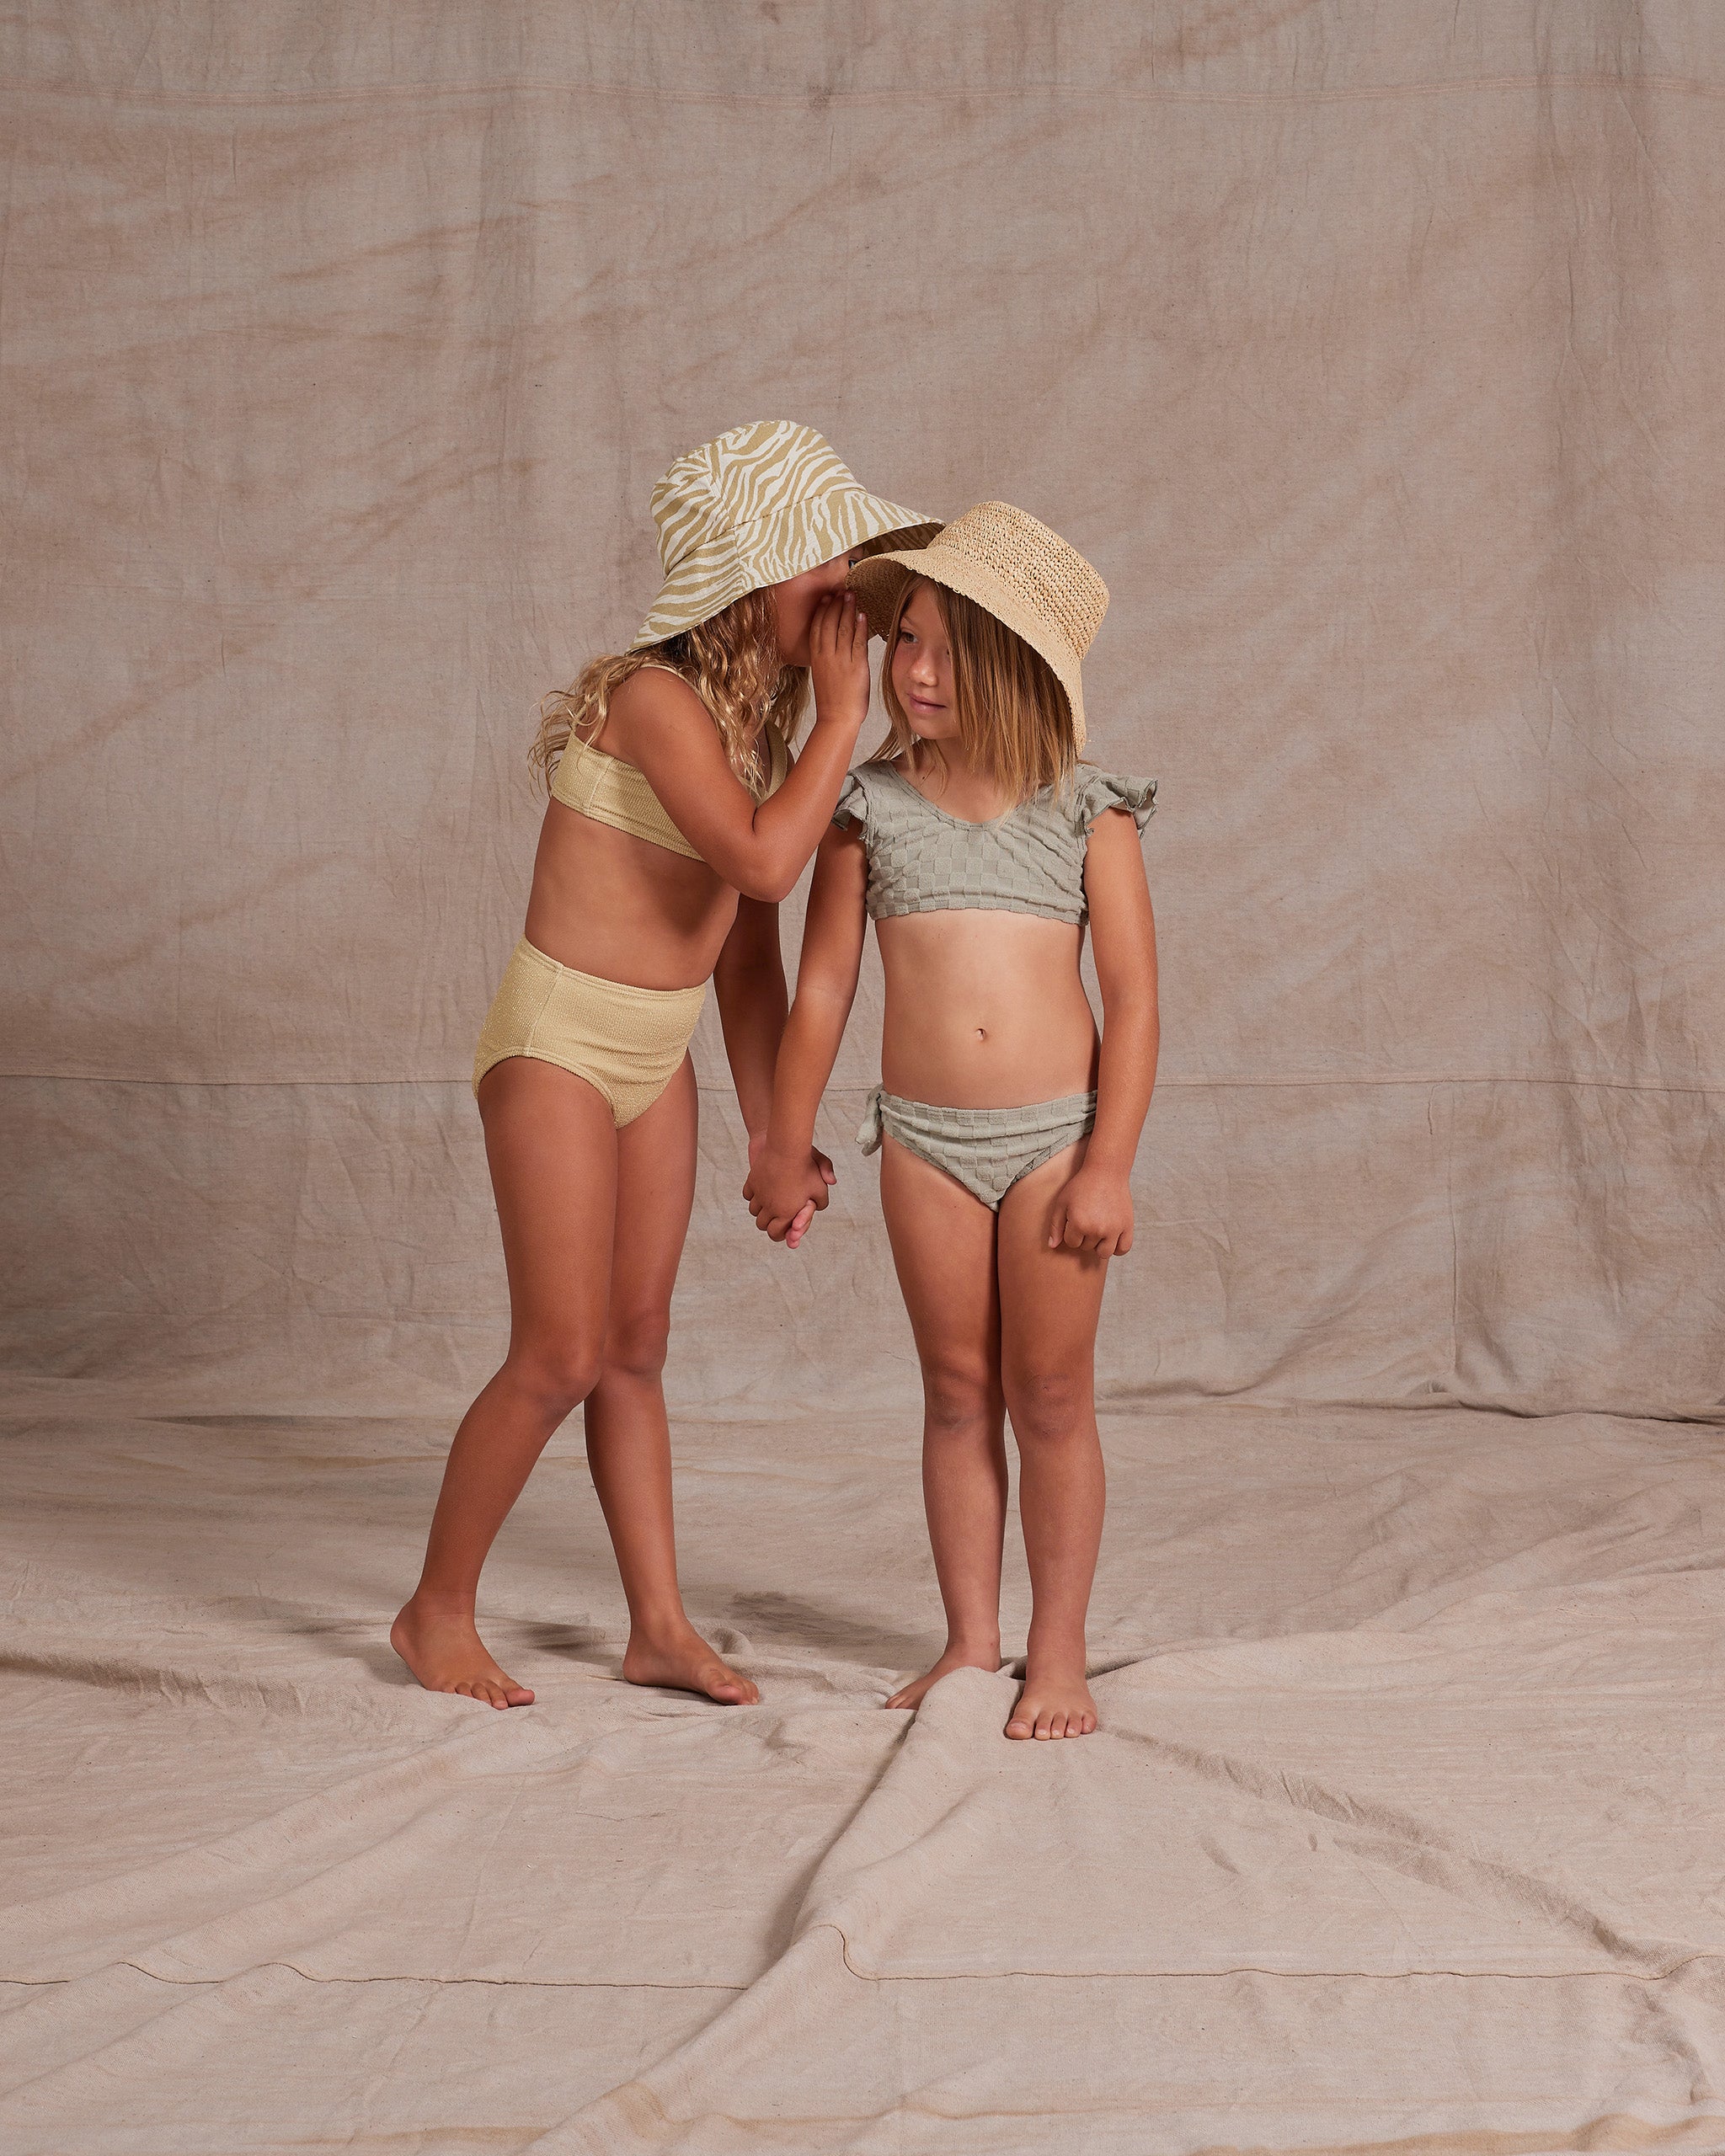 Baby Swimsuit & Floppy Sun Hat Set